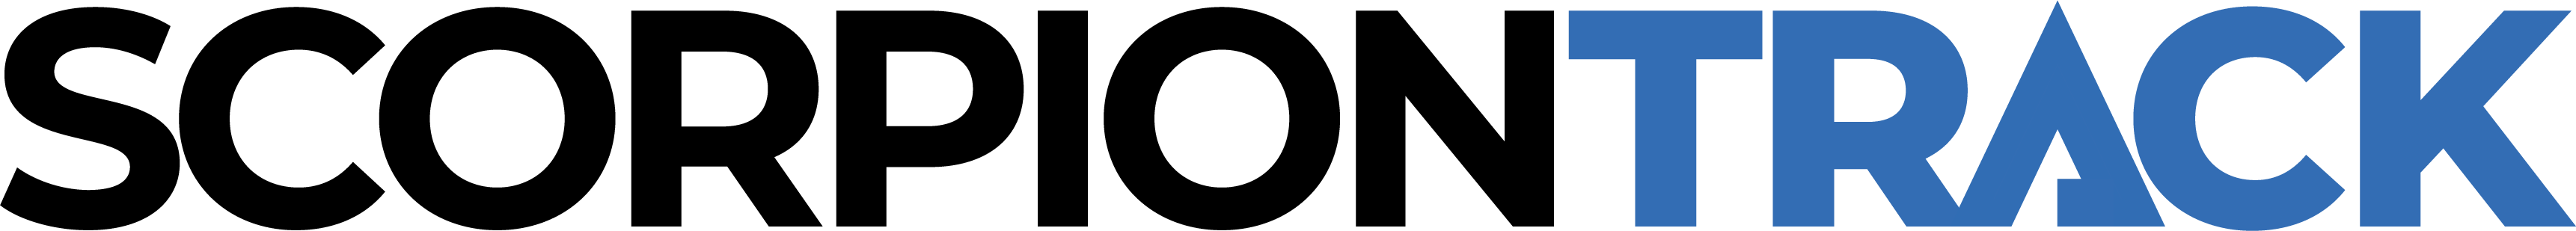 fleetlock logo